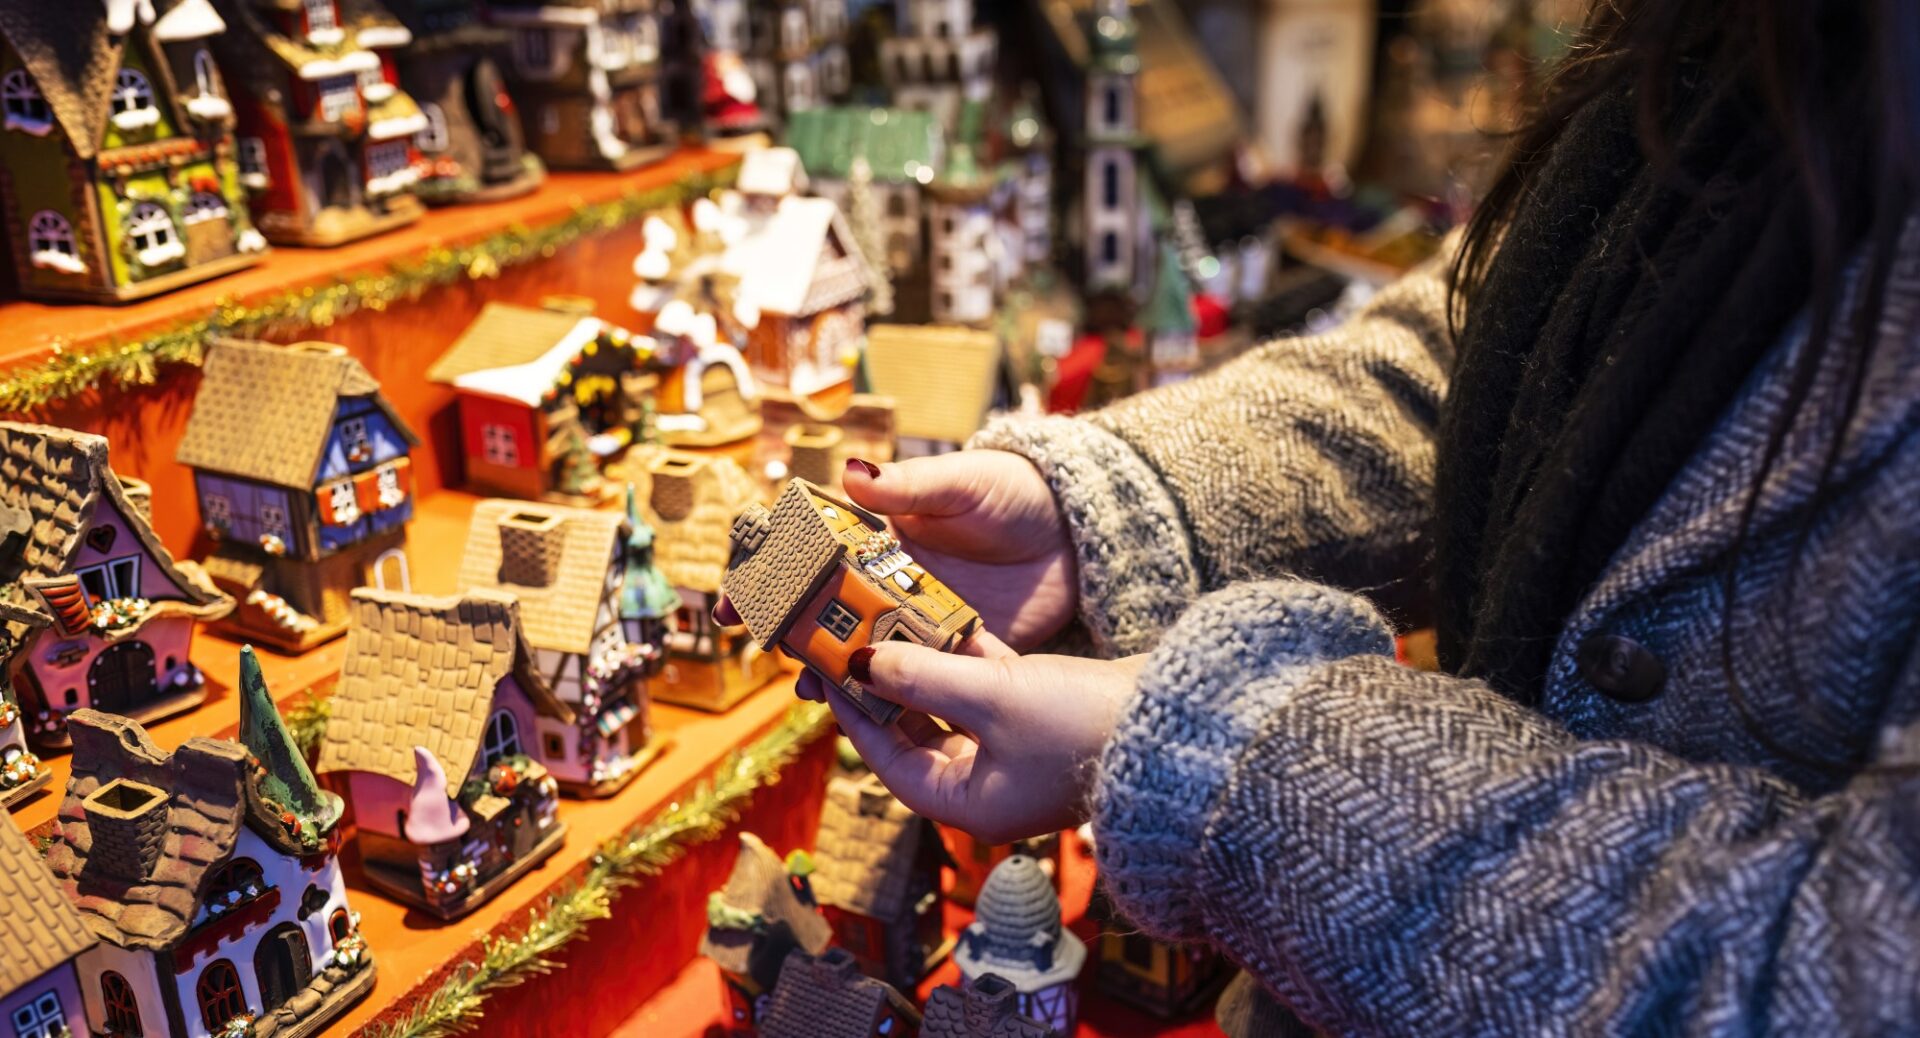 Edinburgh Christmas Market - lady's hand holding small house ornament.